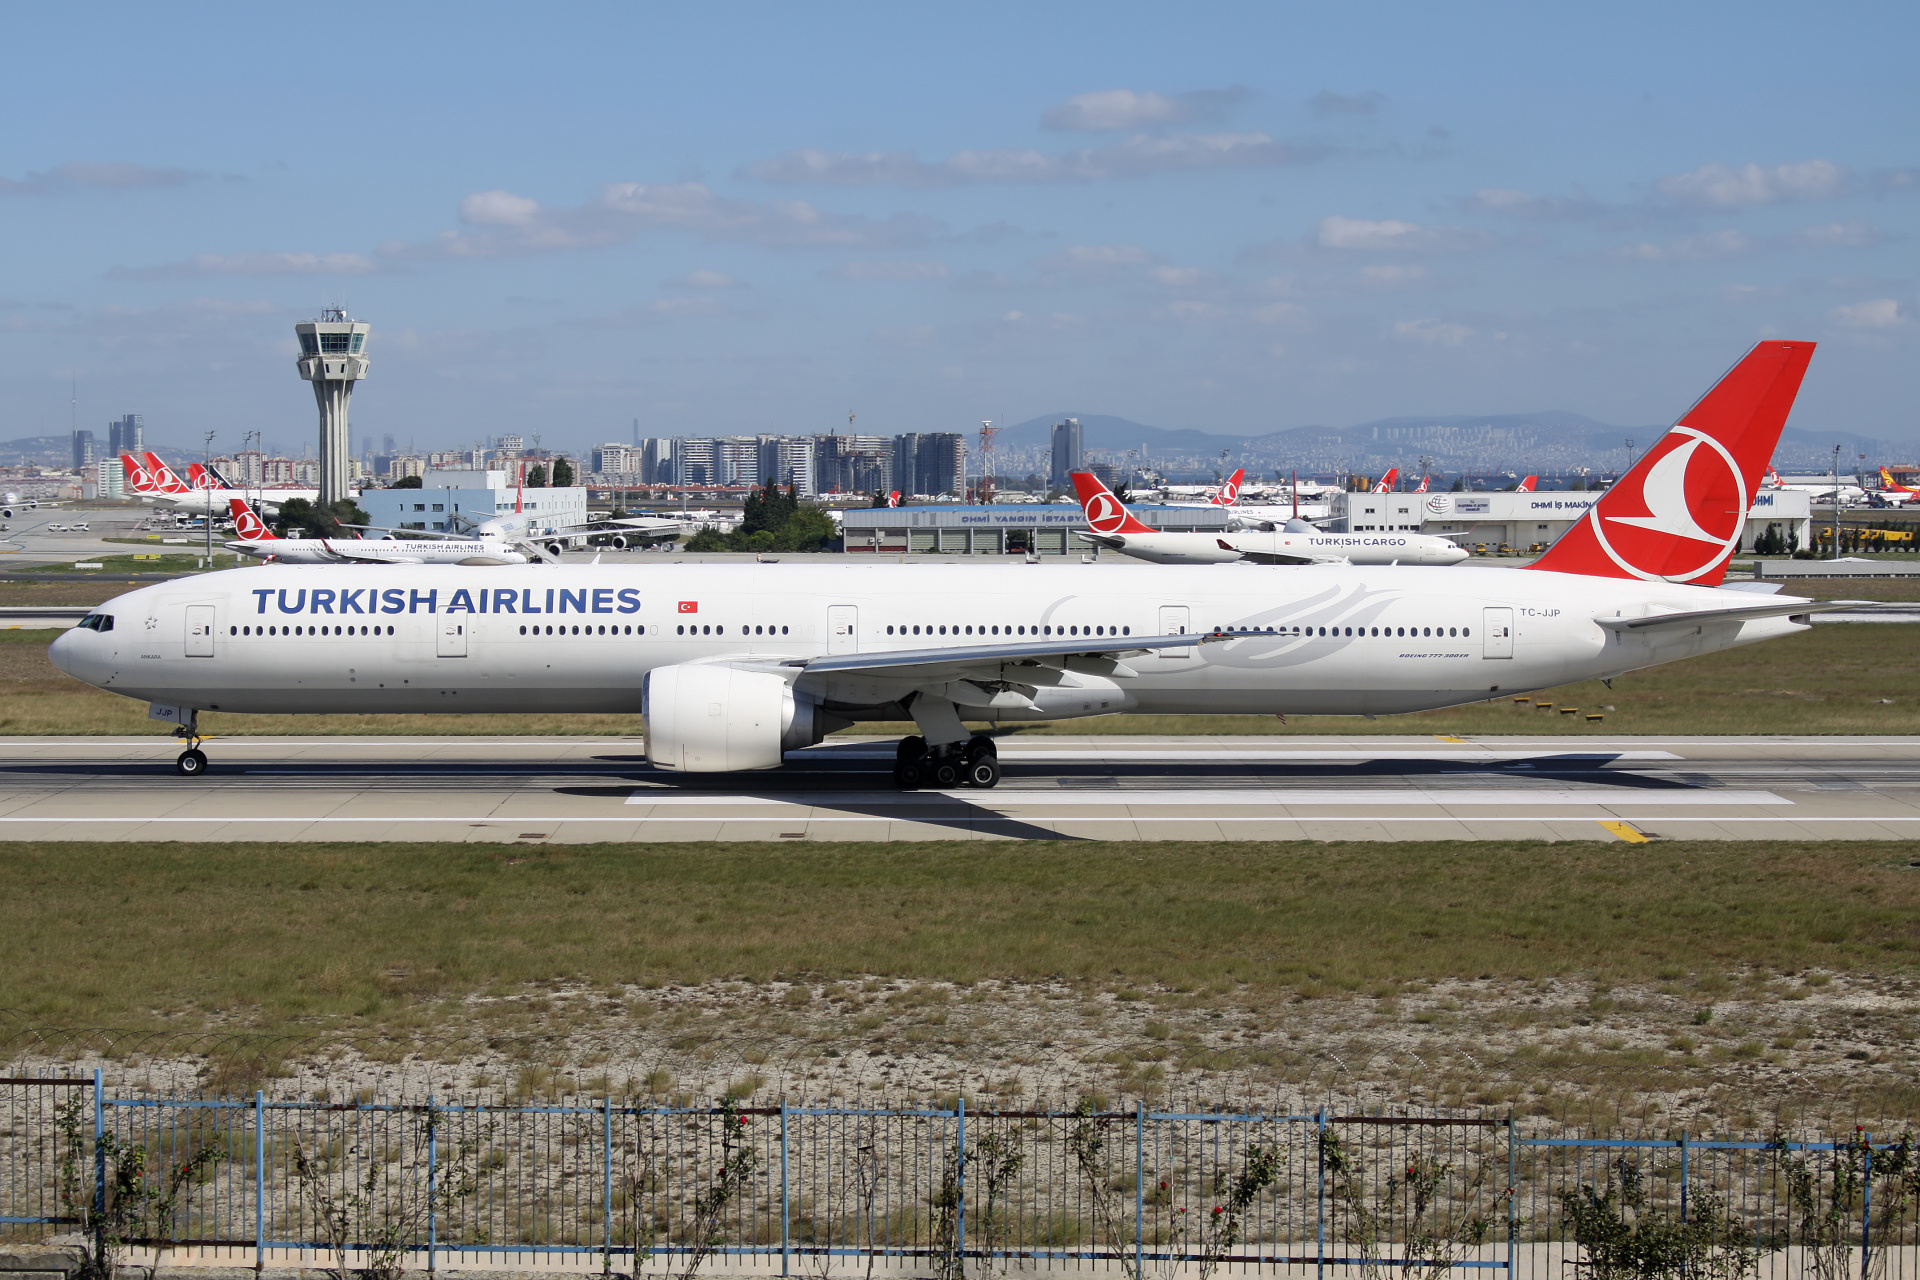 TC-JJP (Samoloty » Port Lotniczy im. Atatürka w Stambule » Boeing 777-300ER » THY Turkish Airlines)